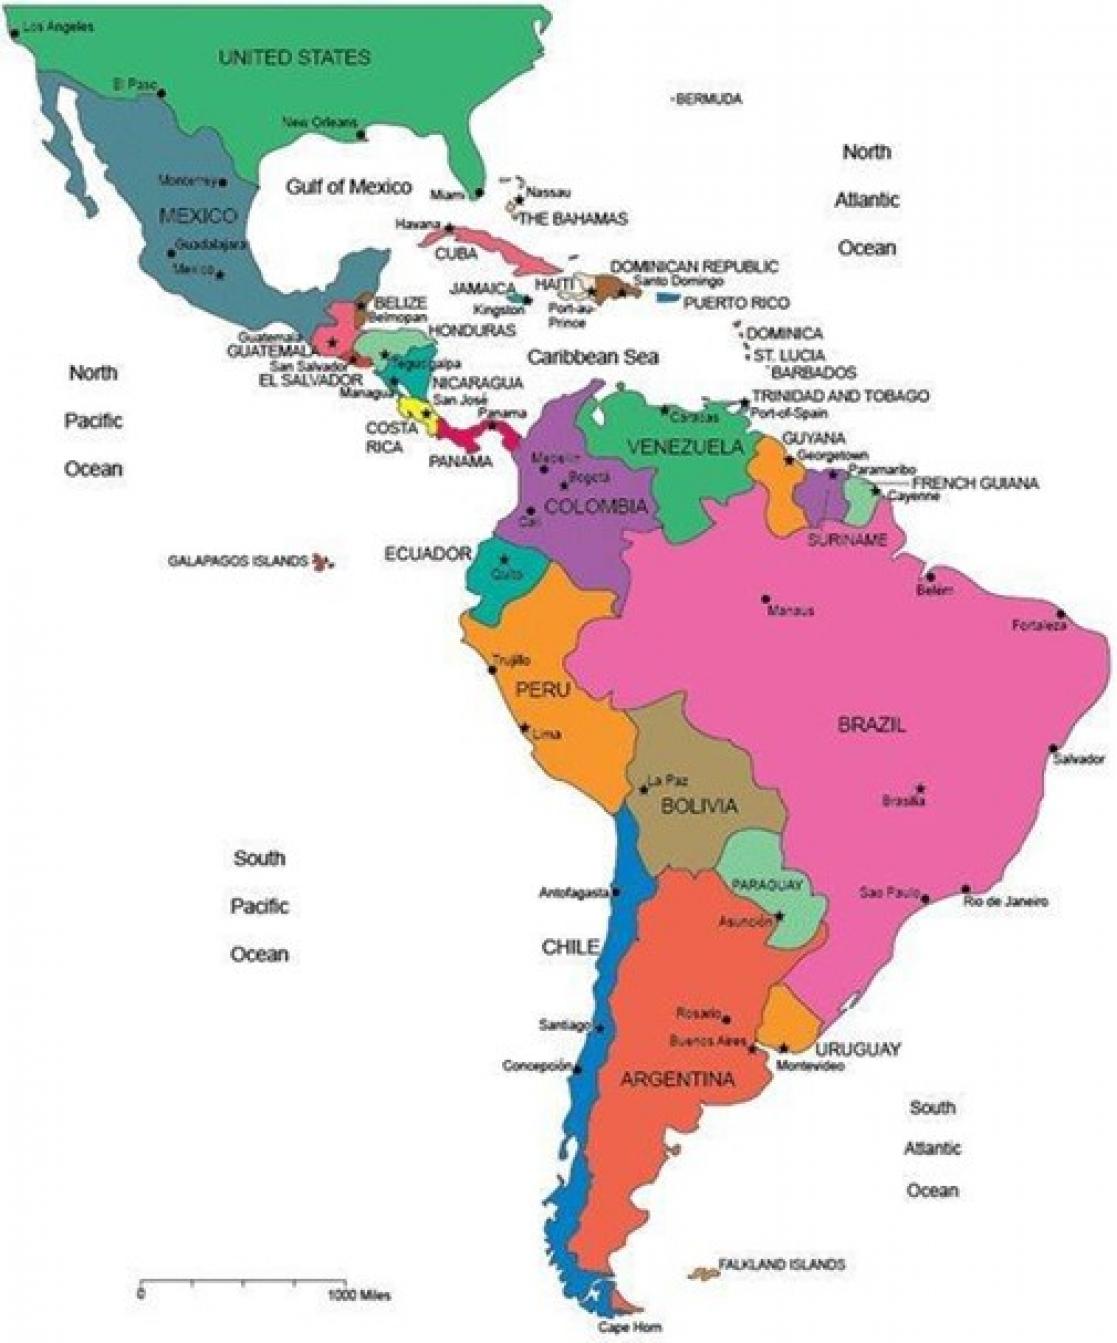 Latin America 